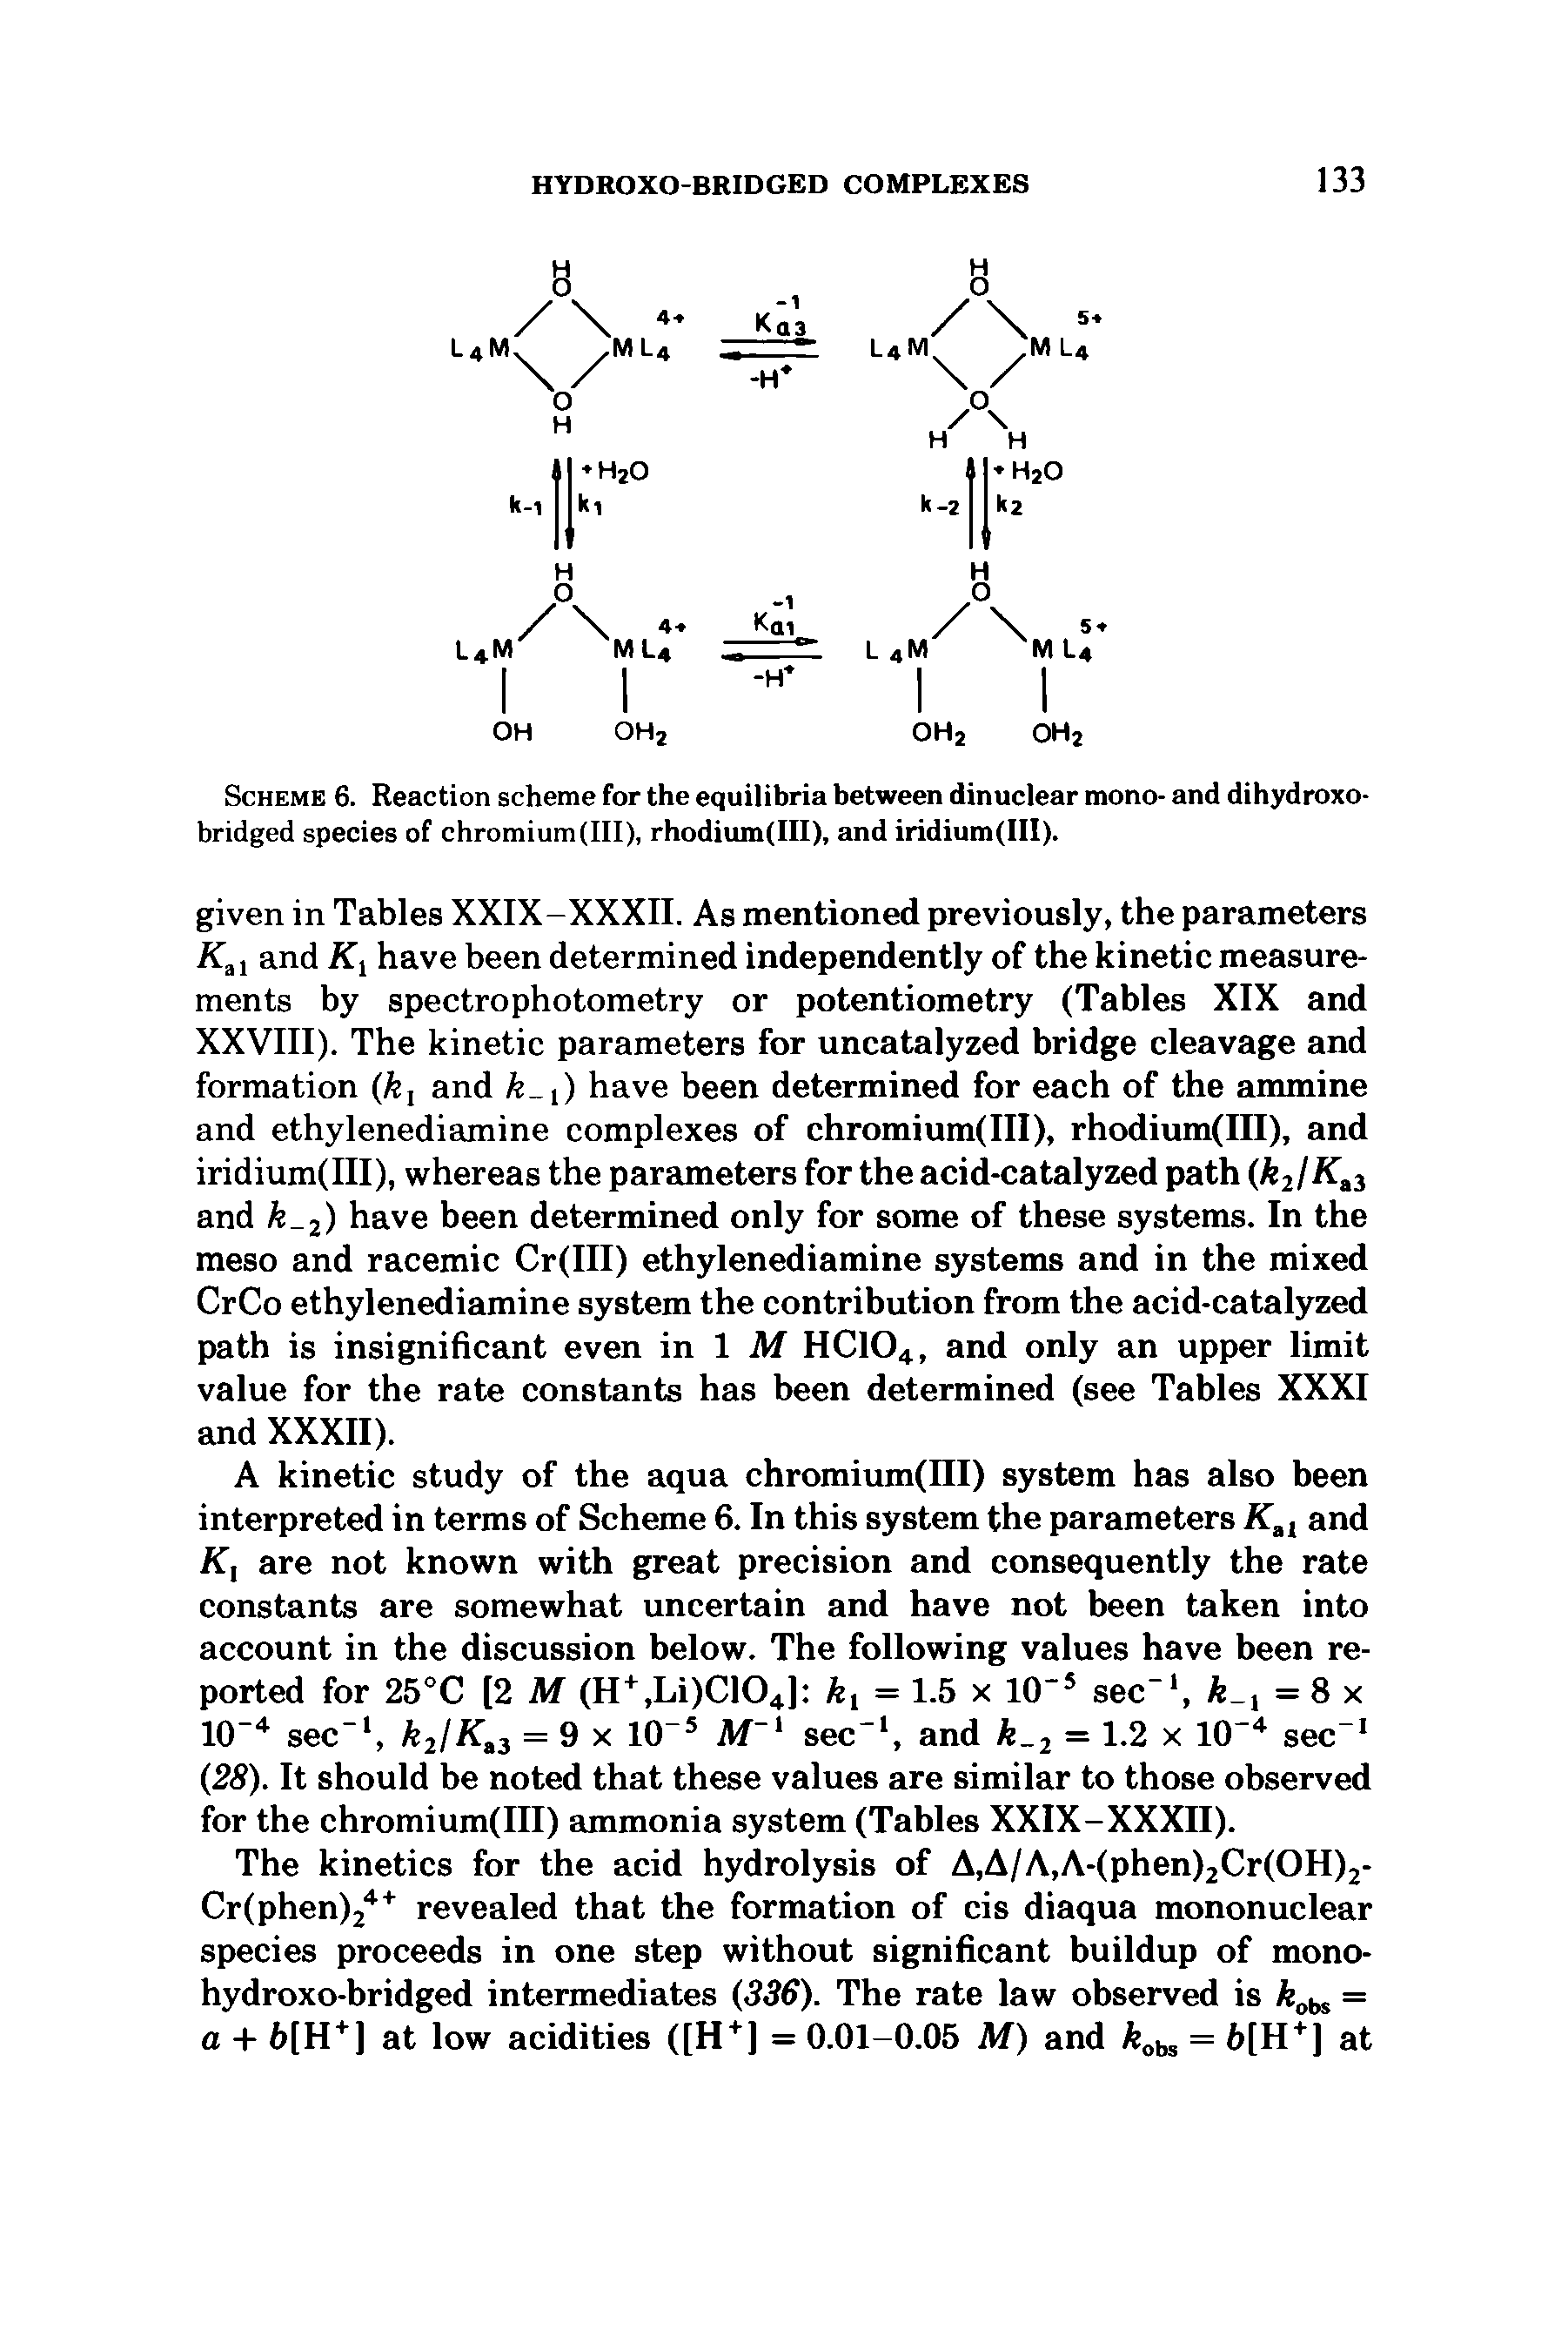 Scheme 6. Reaction scheme for the equilibria between dinuclear mono- and dihydroxo-bridged species of chromium (III), rhodium(III), and iridium(III).